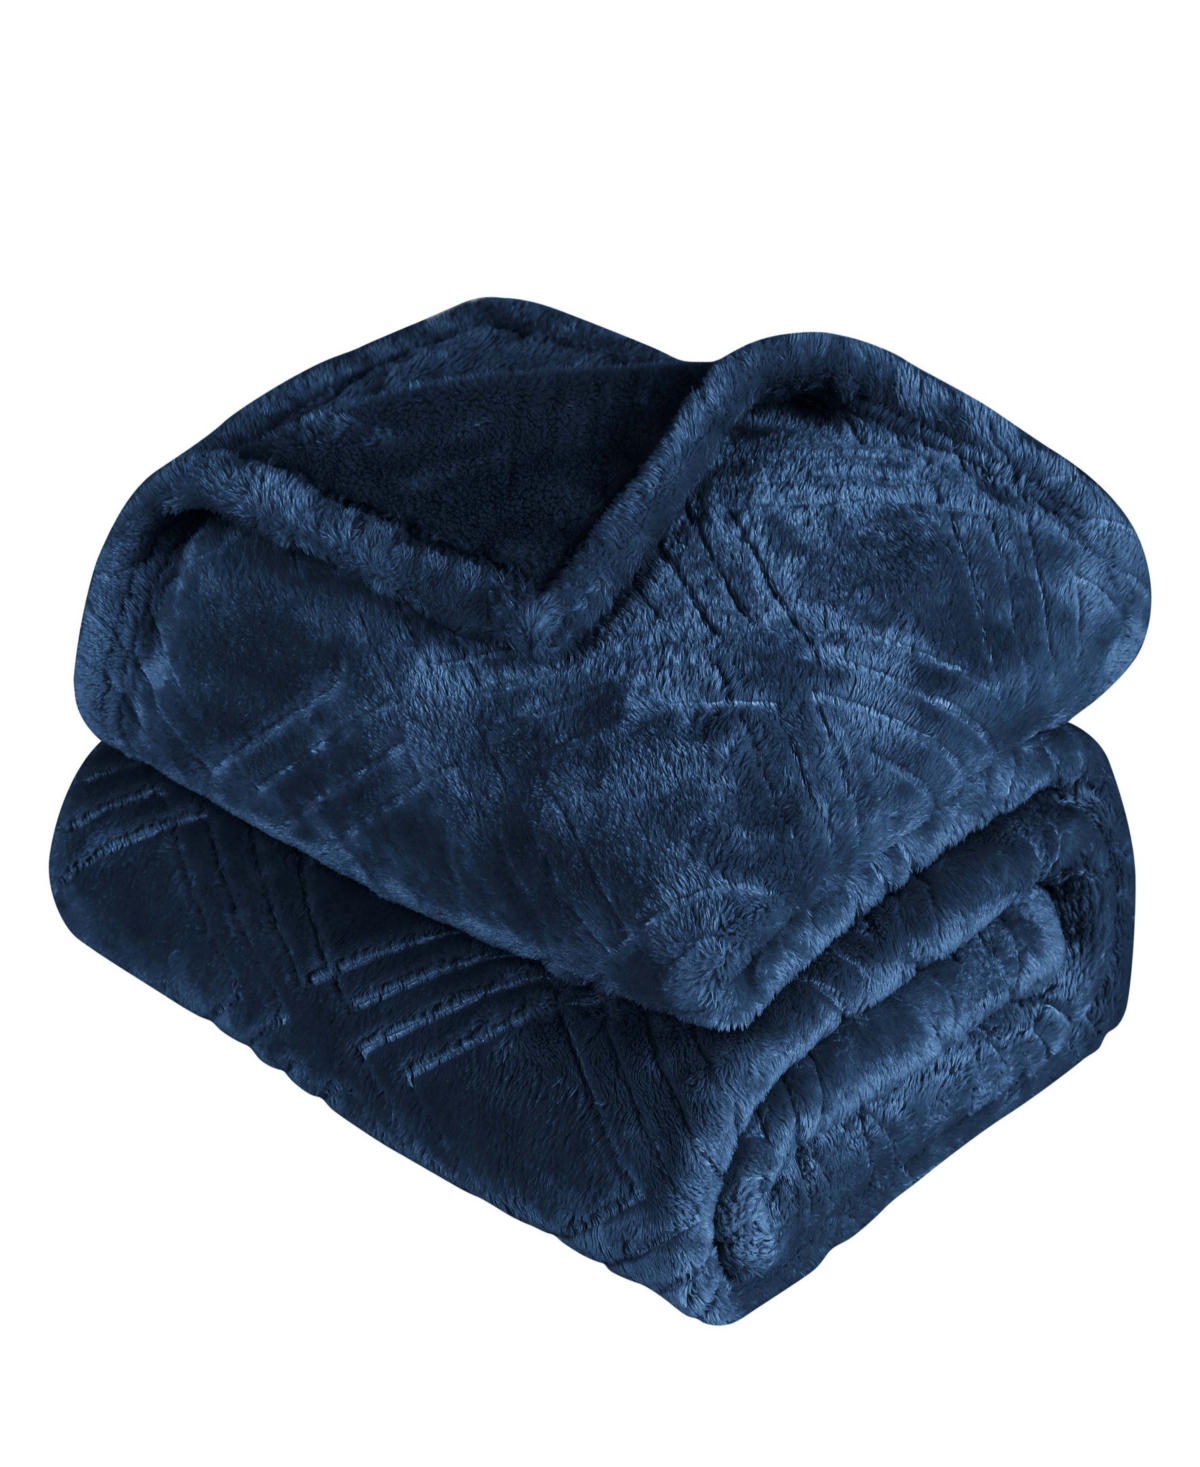 Superior Diamond Flannel Fleece Plush Ultra-soft Blanket, Full/queen In Navy Blue